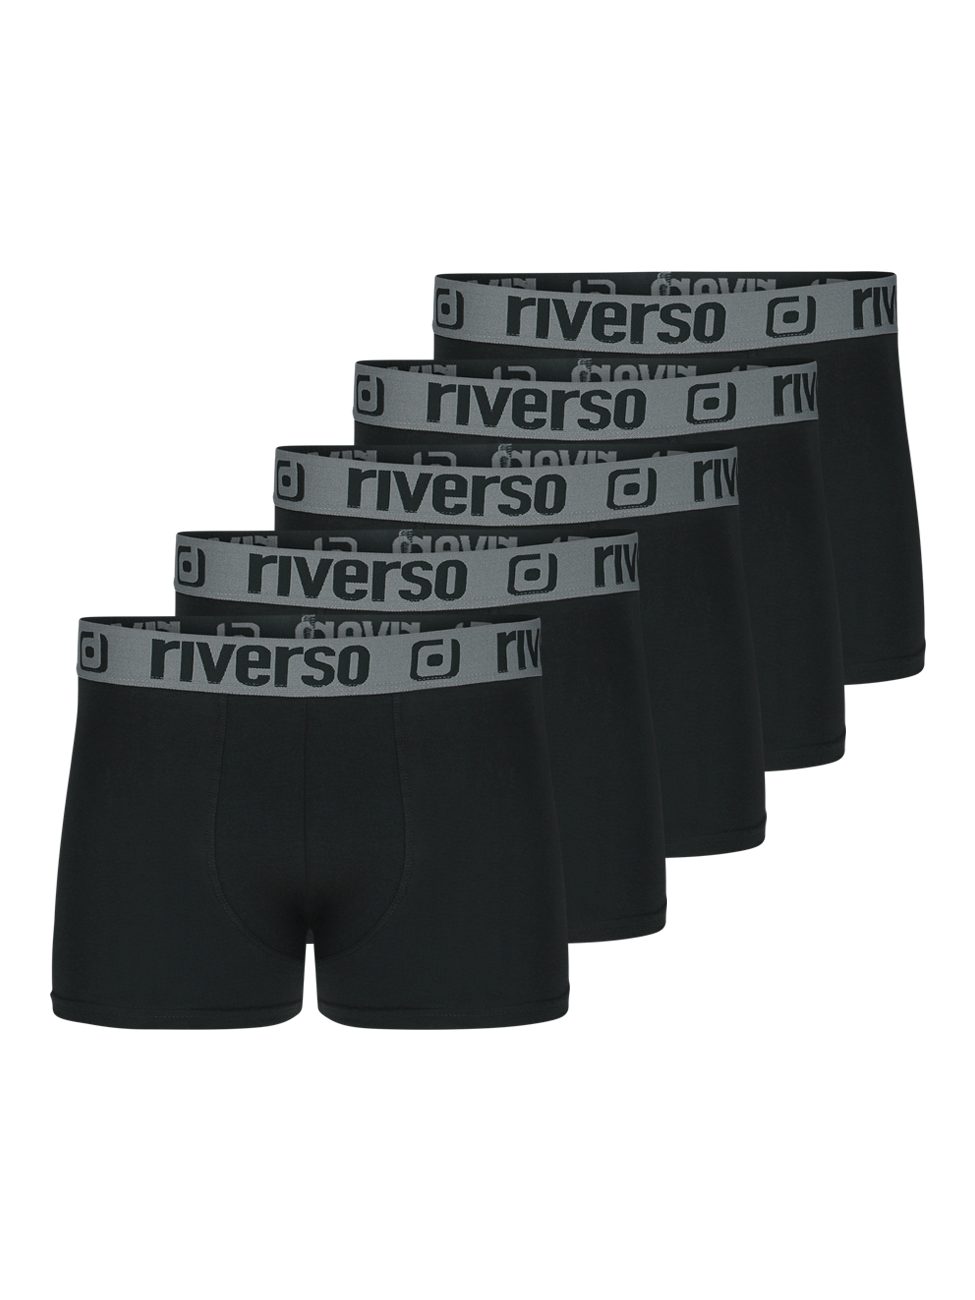 R1) (5-St) RVS/1/BCX5/R1 riverso Stretch (Farbmix Boxershorts mit RIVHarry